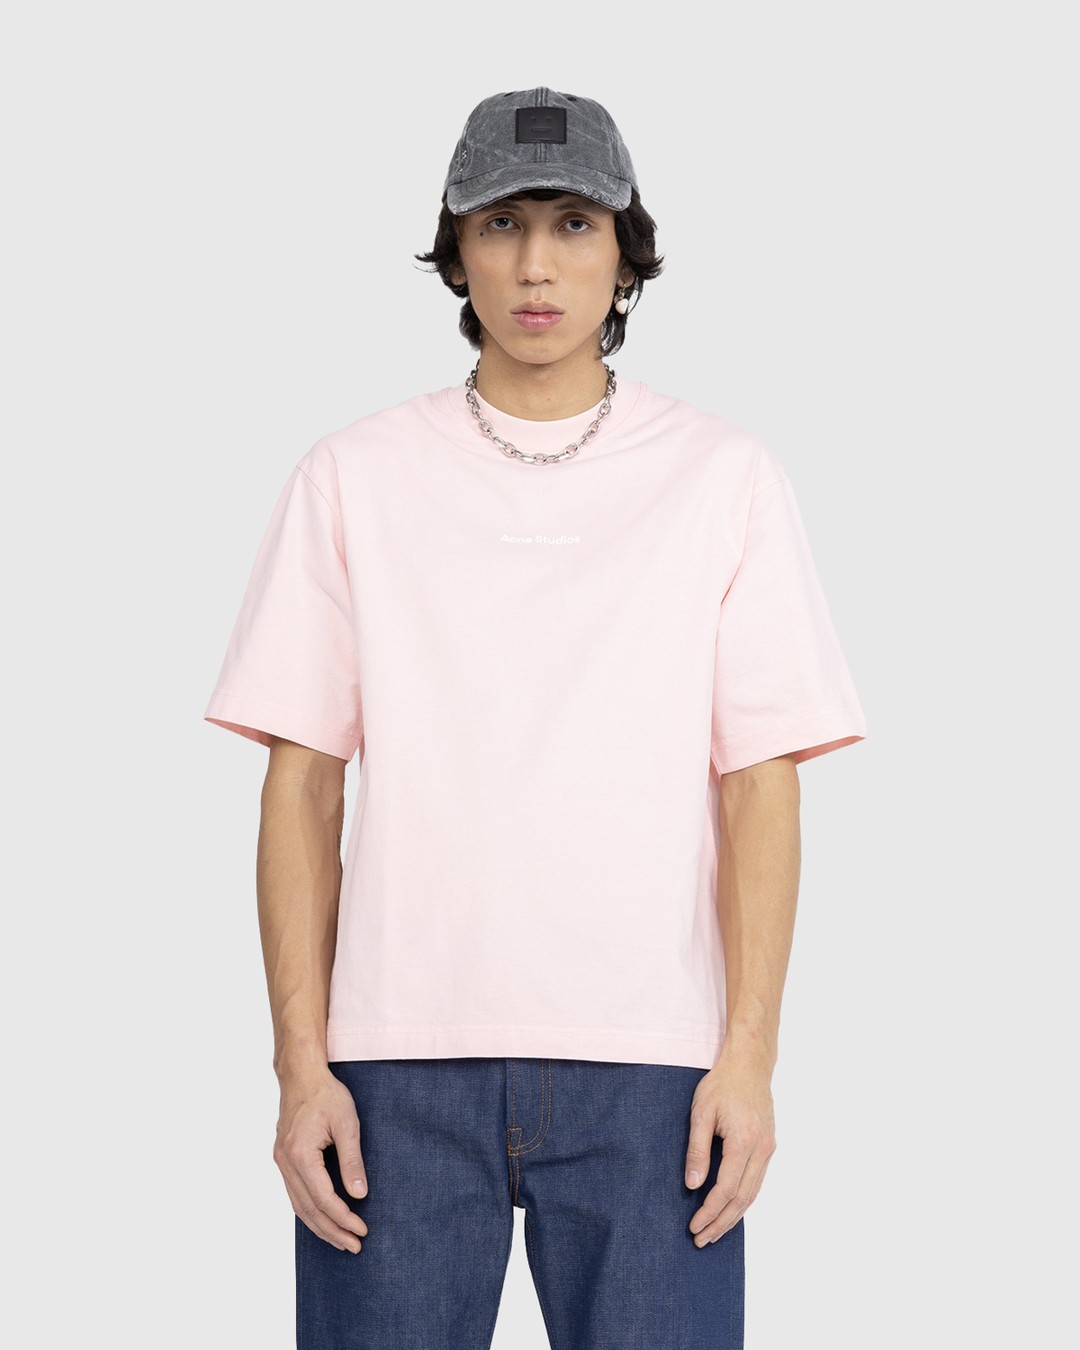 Acne Studios – Logo T-Shirt Pale Pink | Highsnobiety Shop